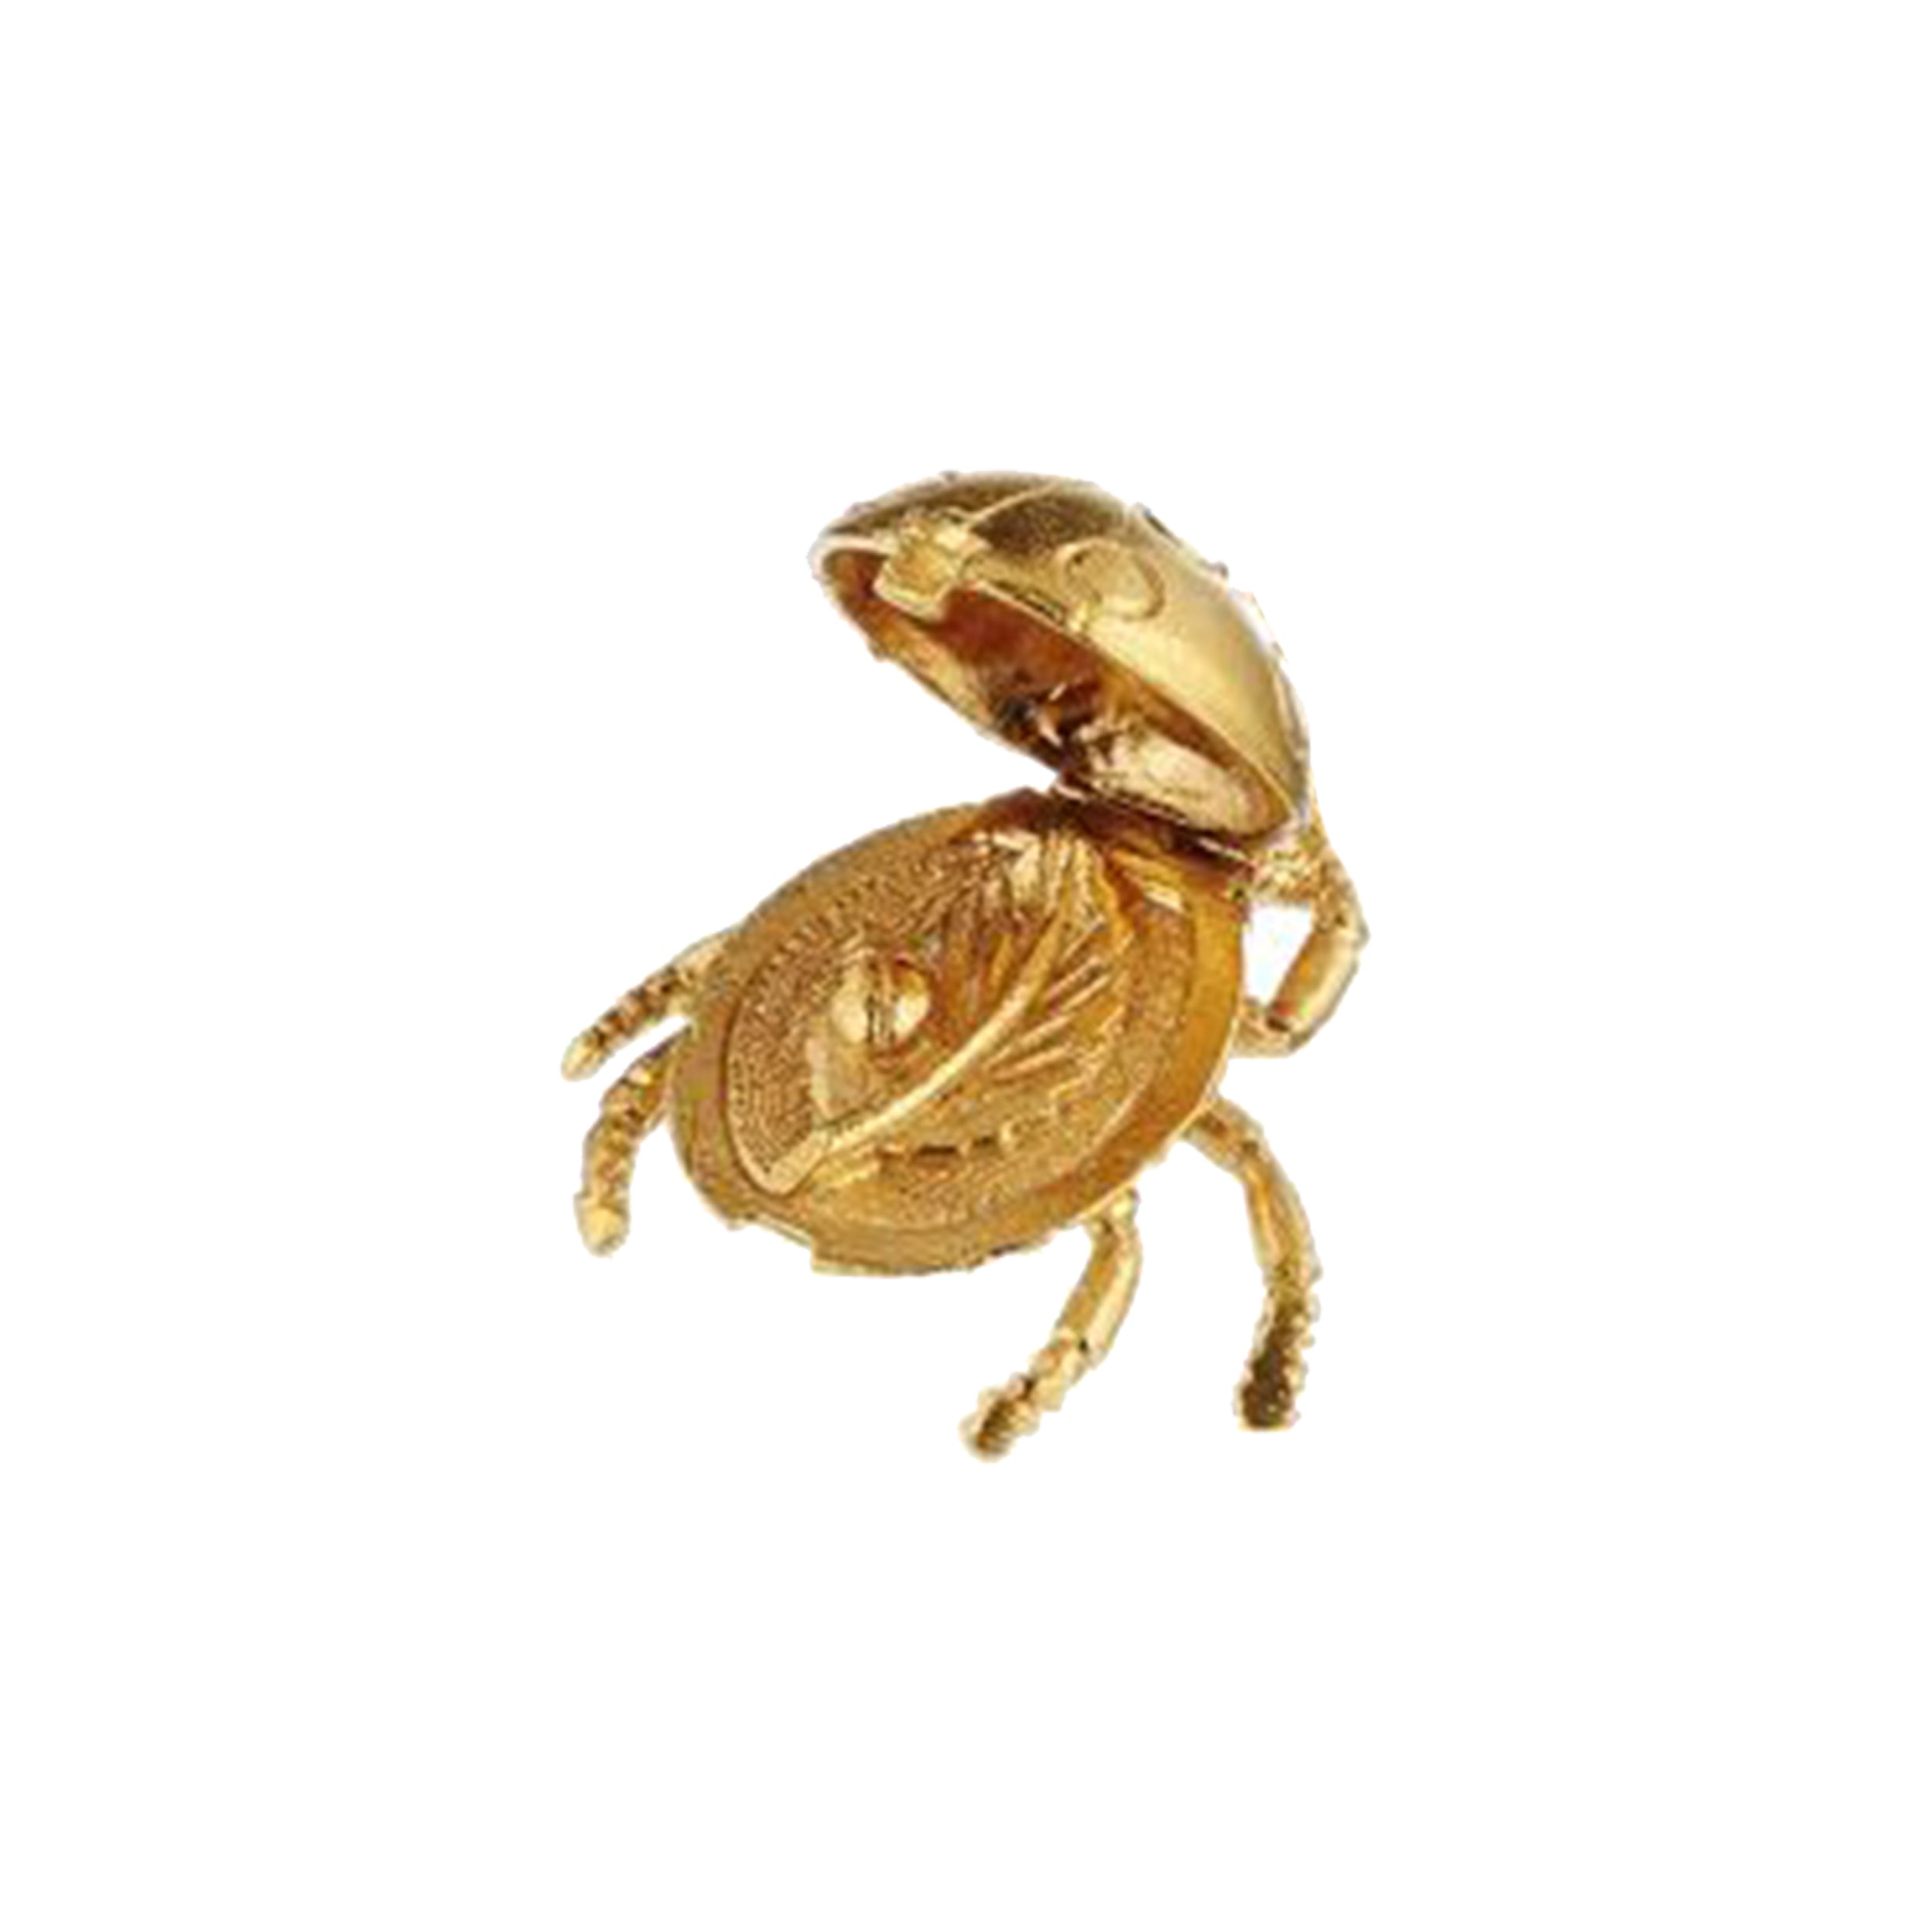 Ladybird Charm - Mirabelle Jewellery